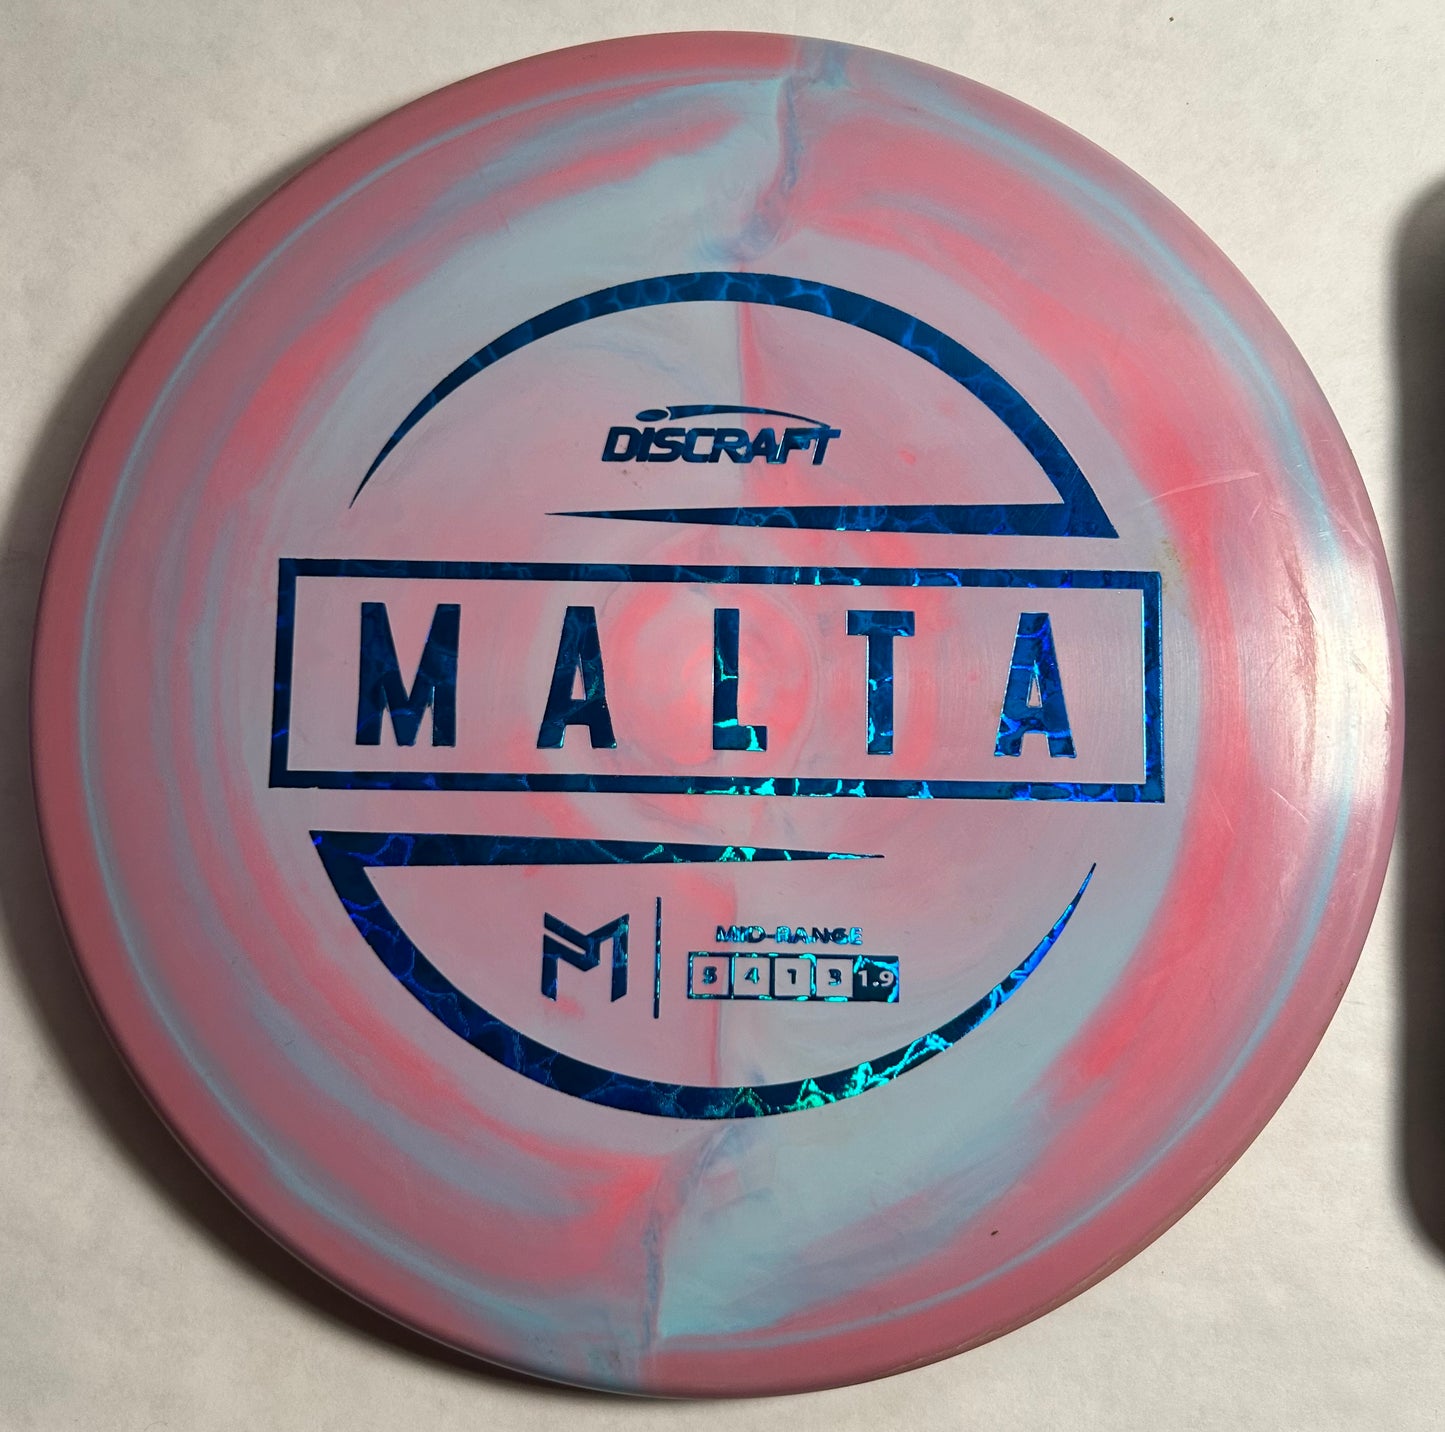 Discraft Malta - McBeth